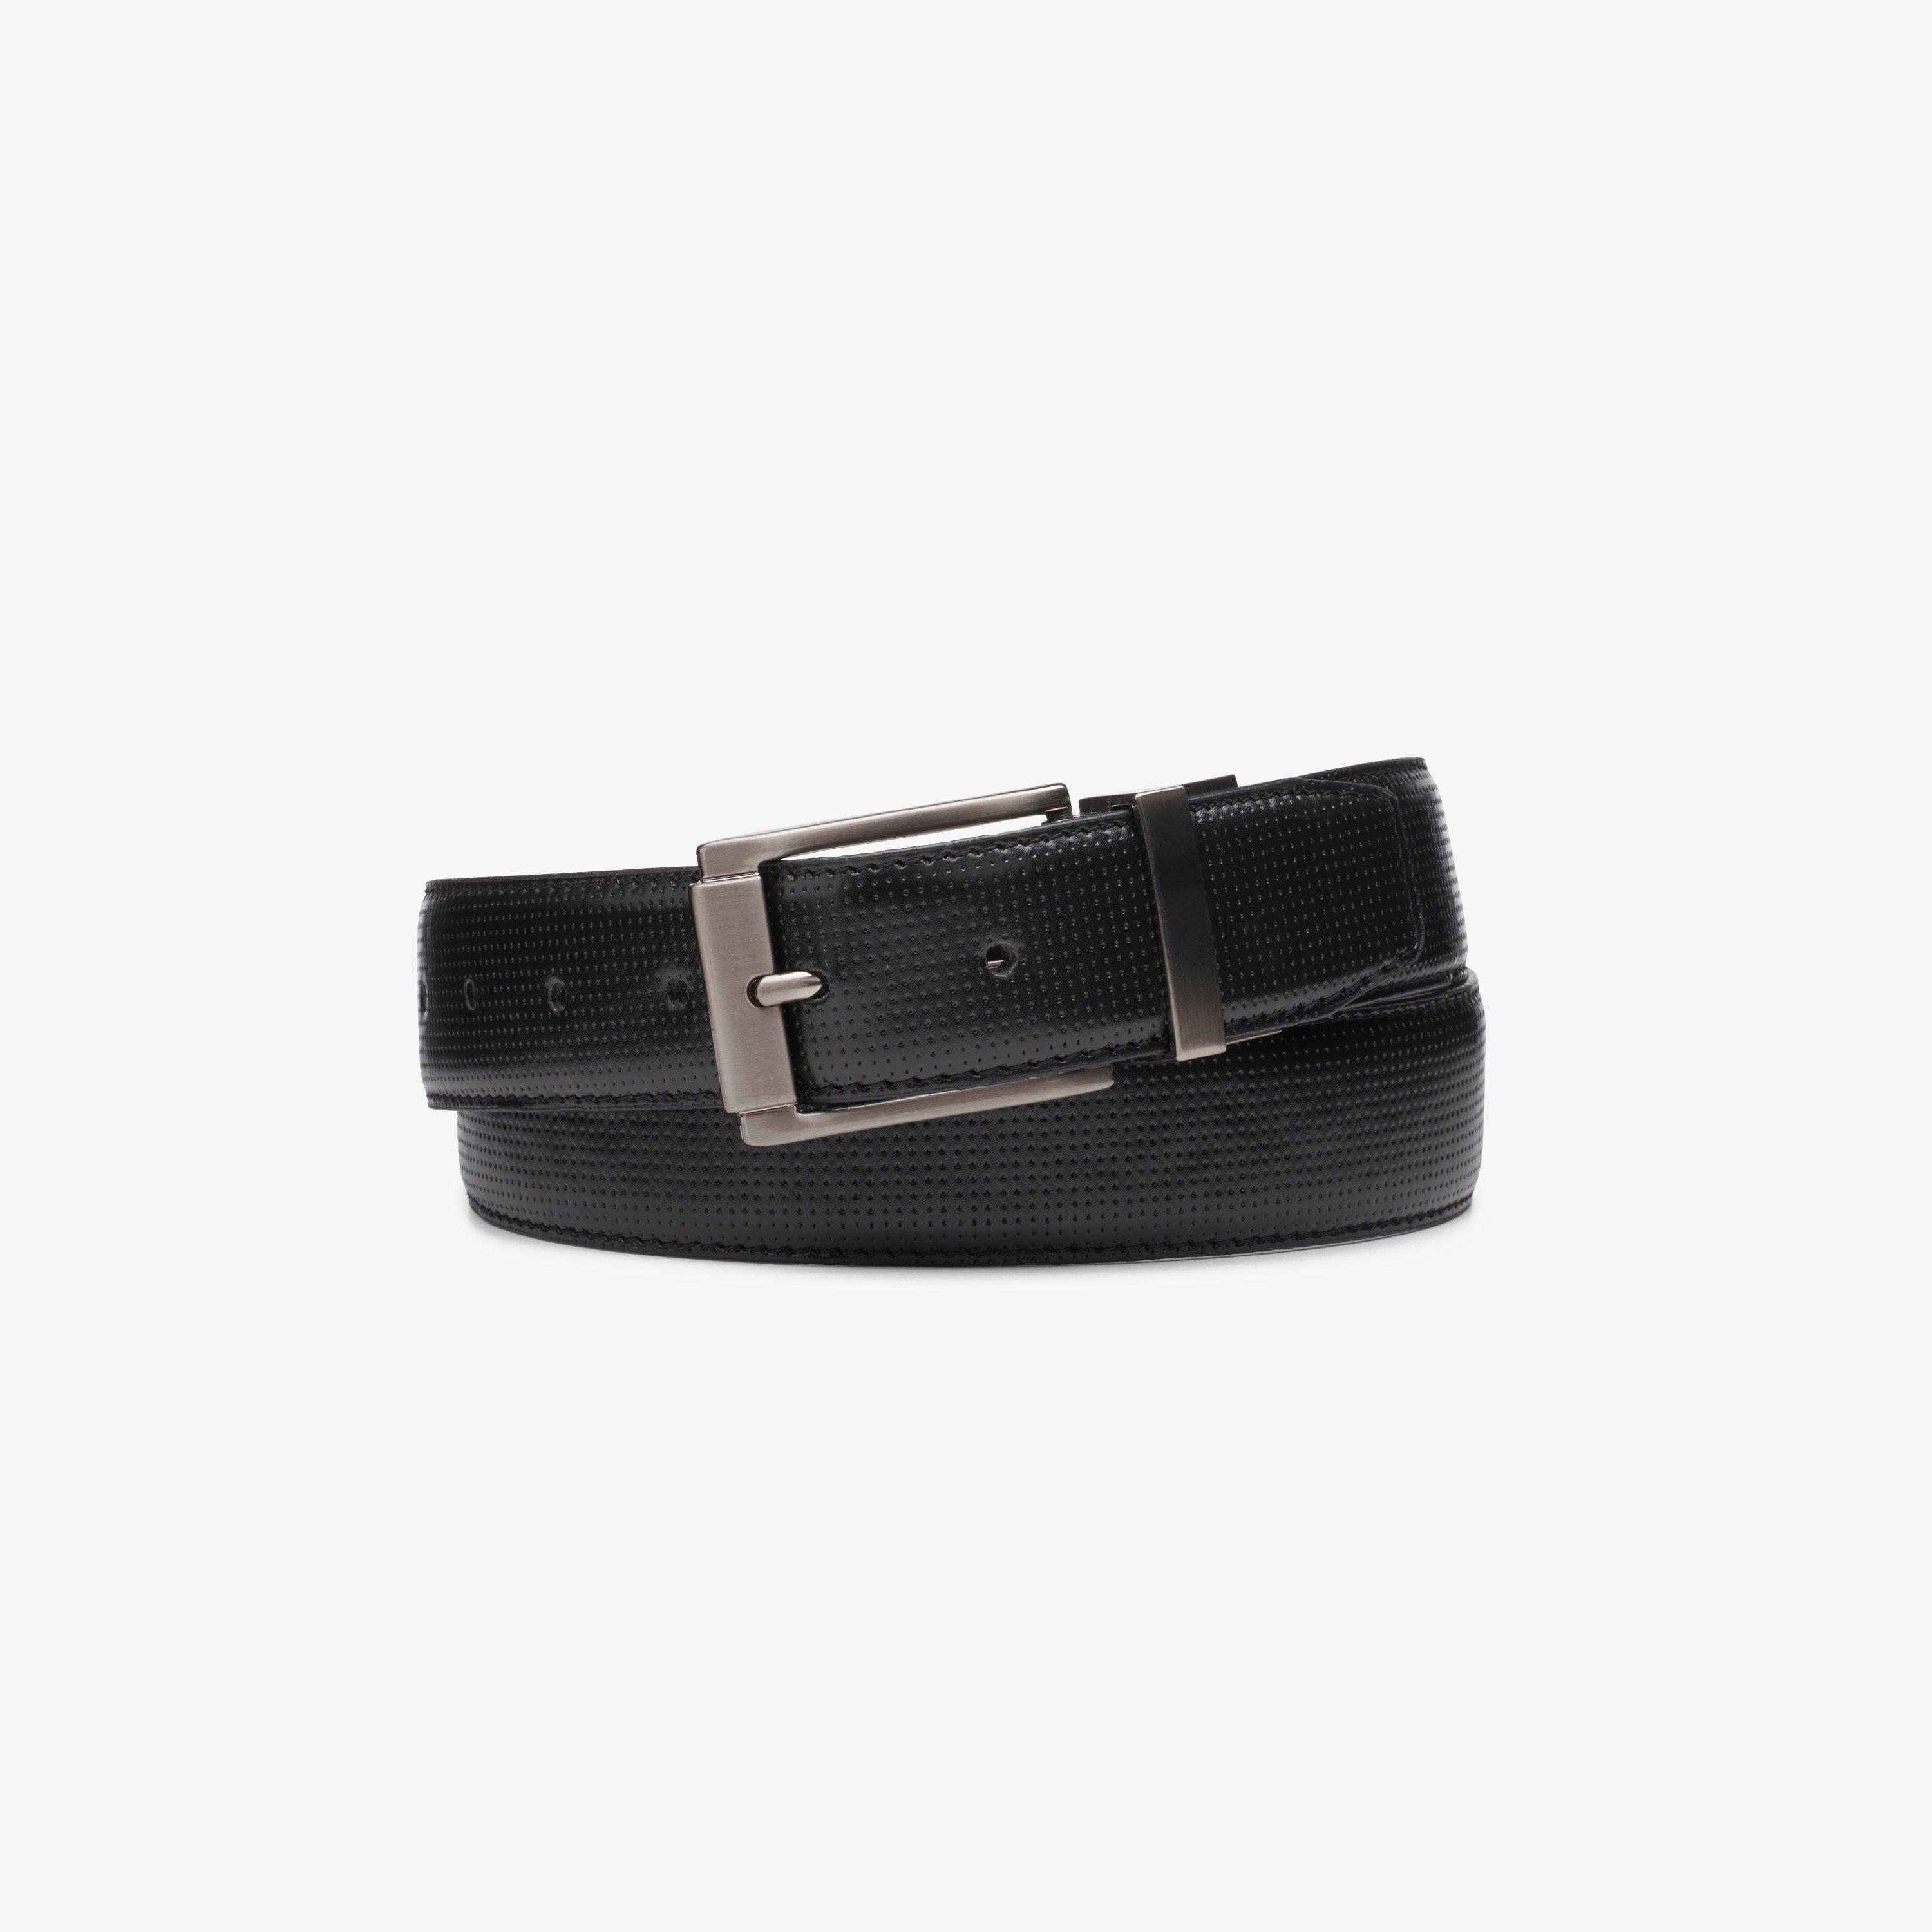 Hot Selling Reversible Genuine leather Classic Dress belt for Men-Black &  Brown